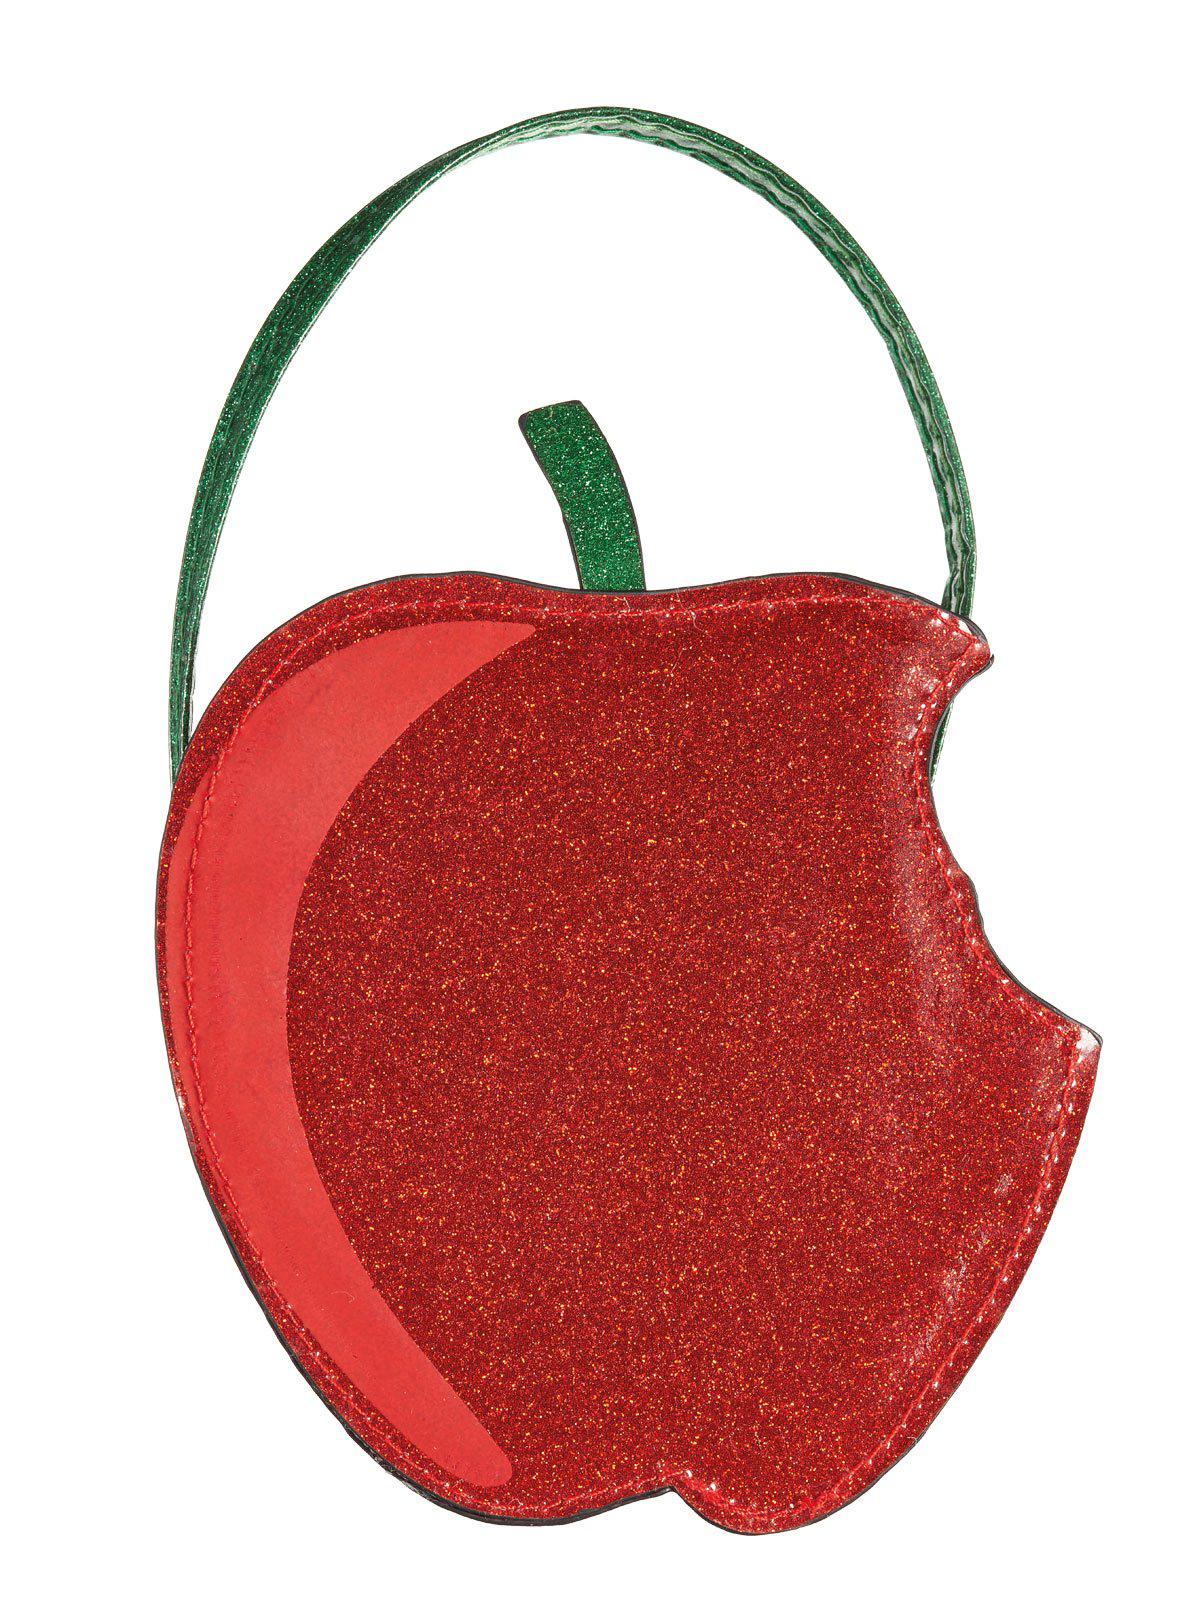 Snow White Apple Accessory Bag